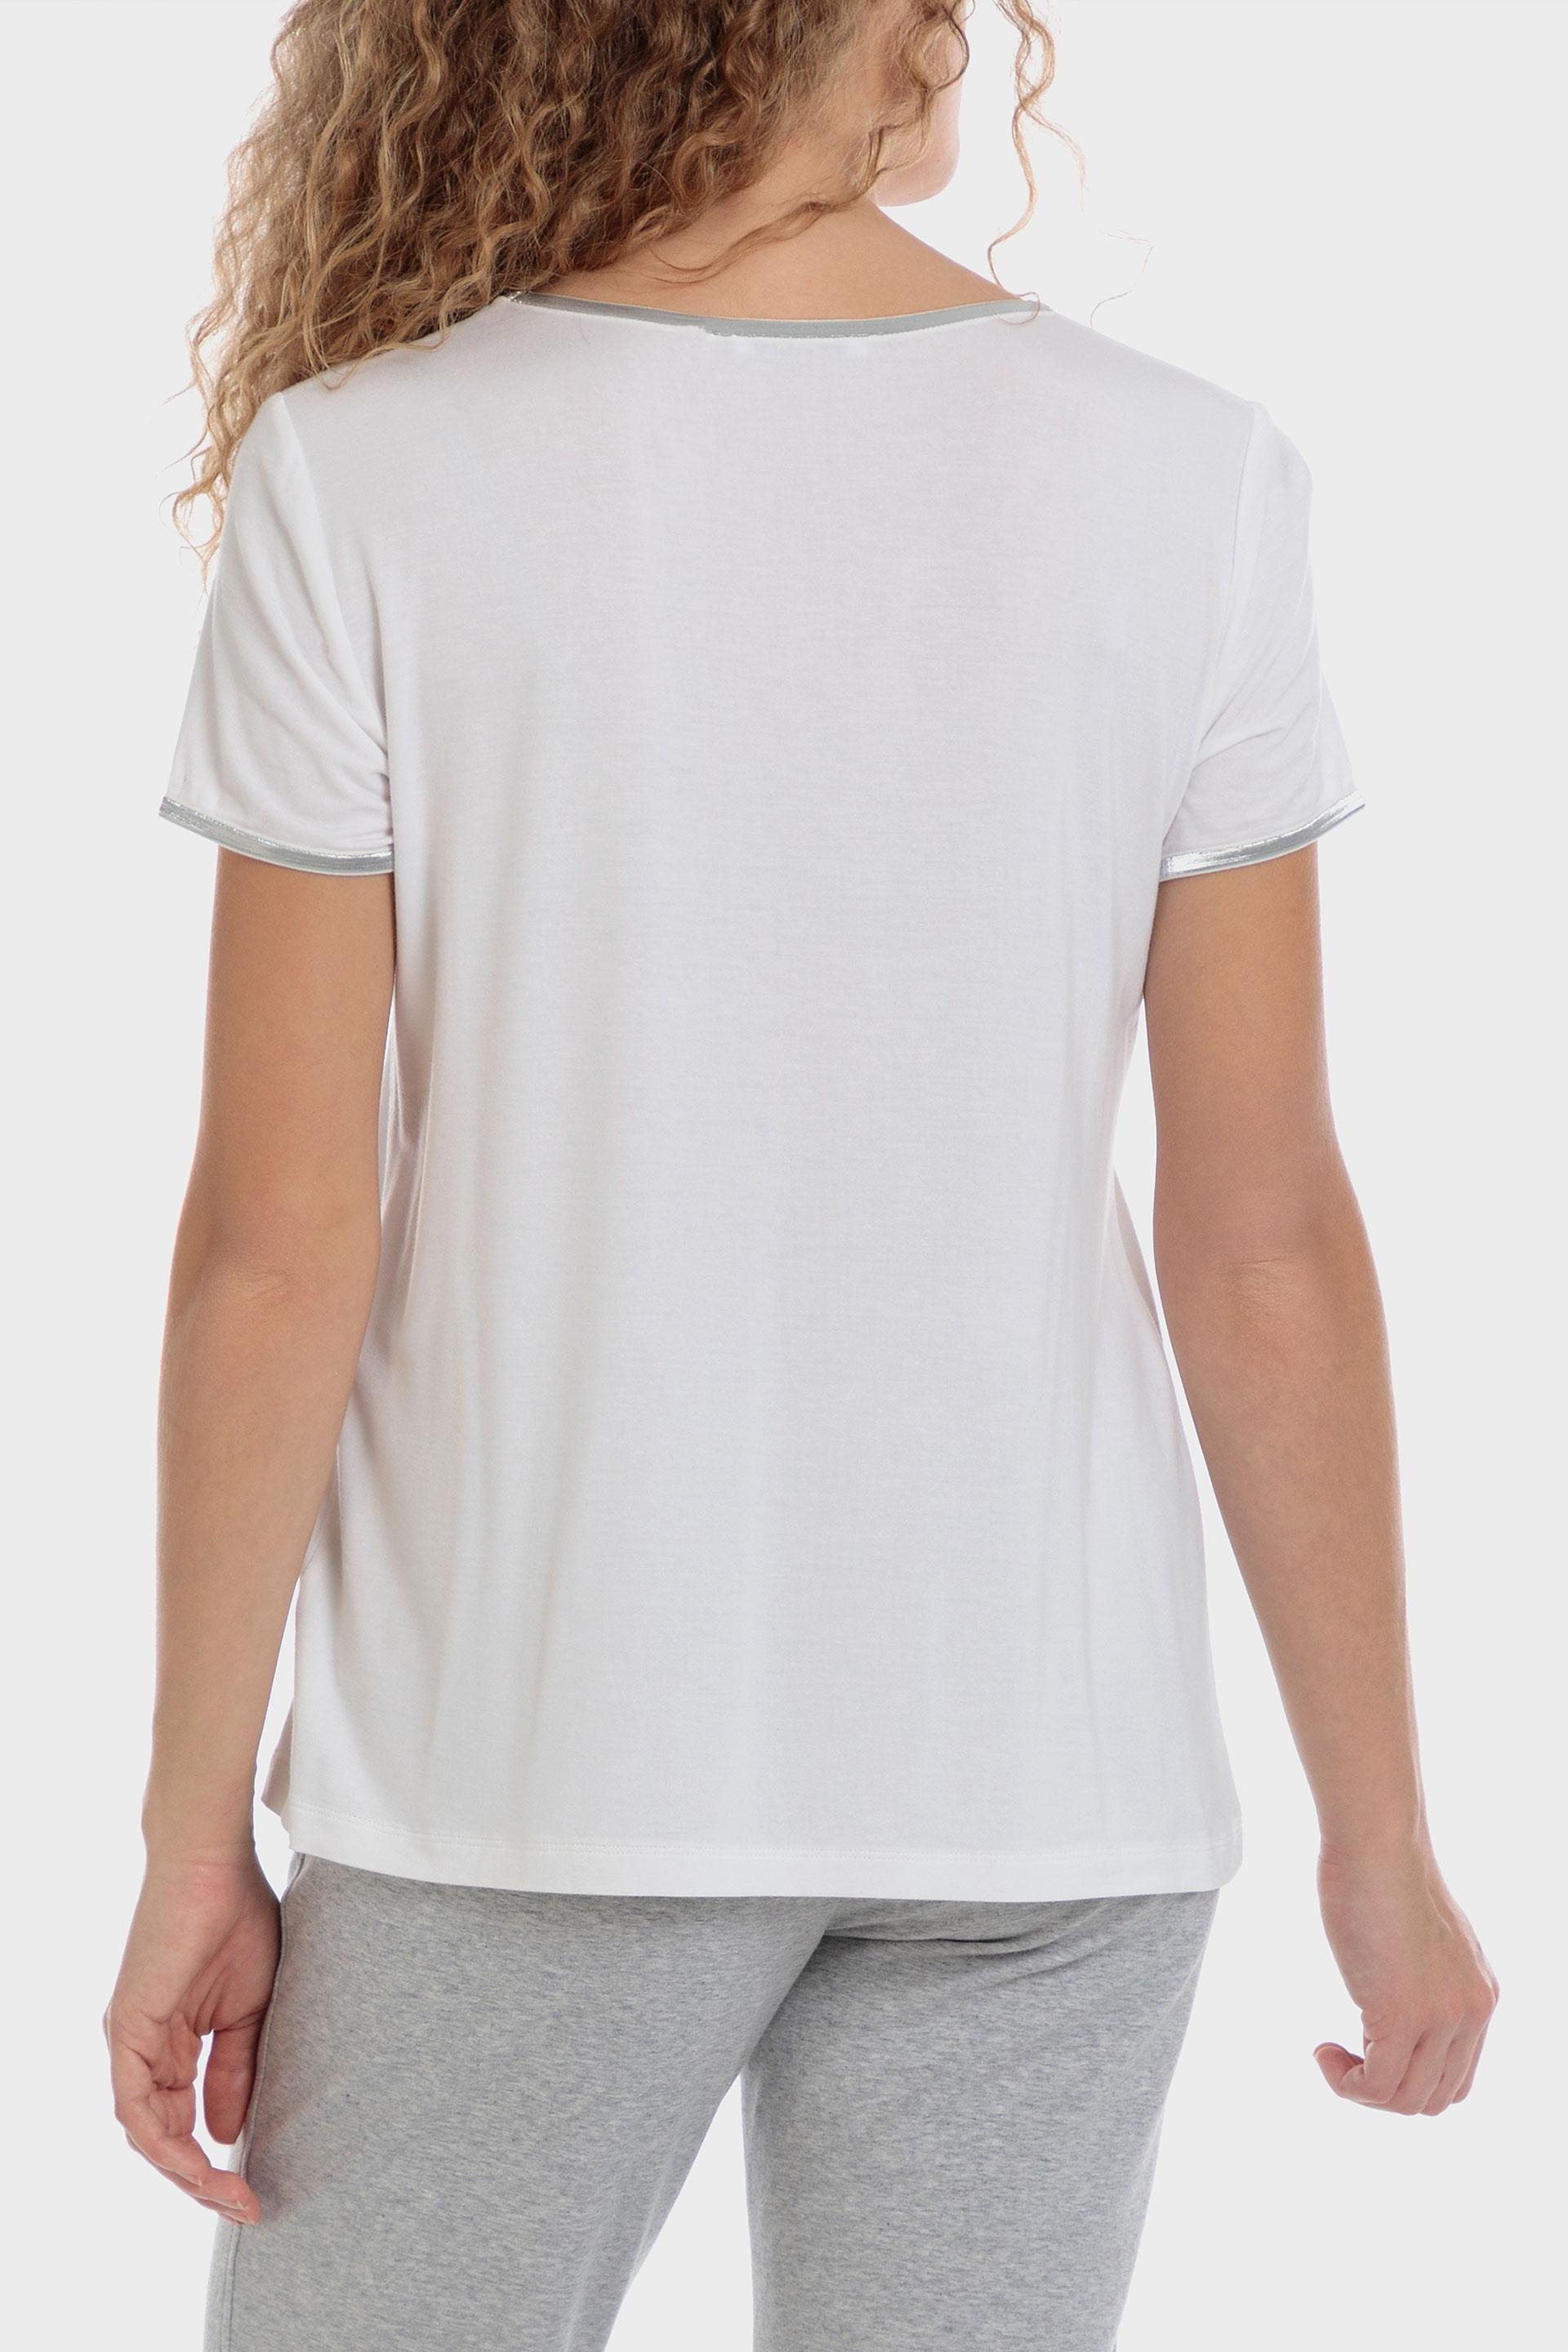 Punt Roma - White Printed T-Shirt